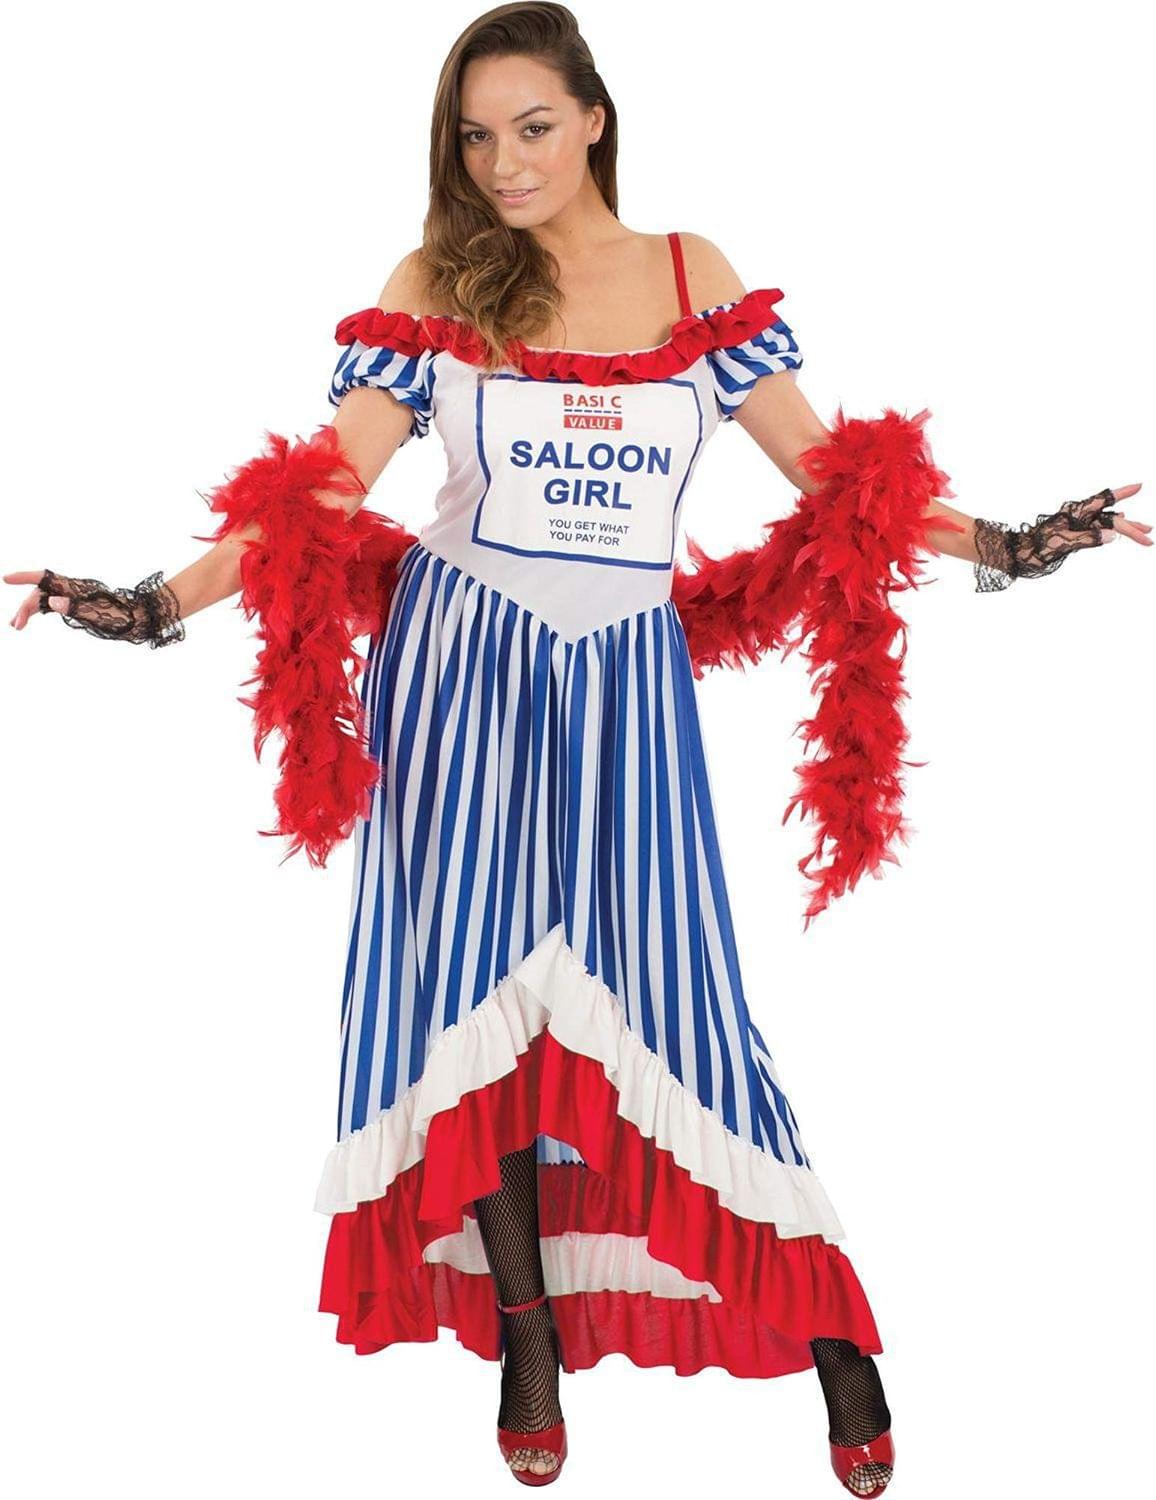 Saloon Girl Fancy Dress Adult Costume - Medium